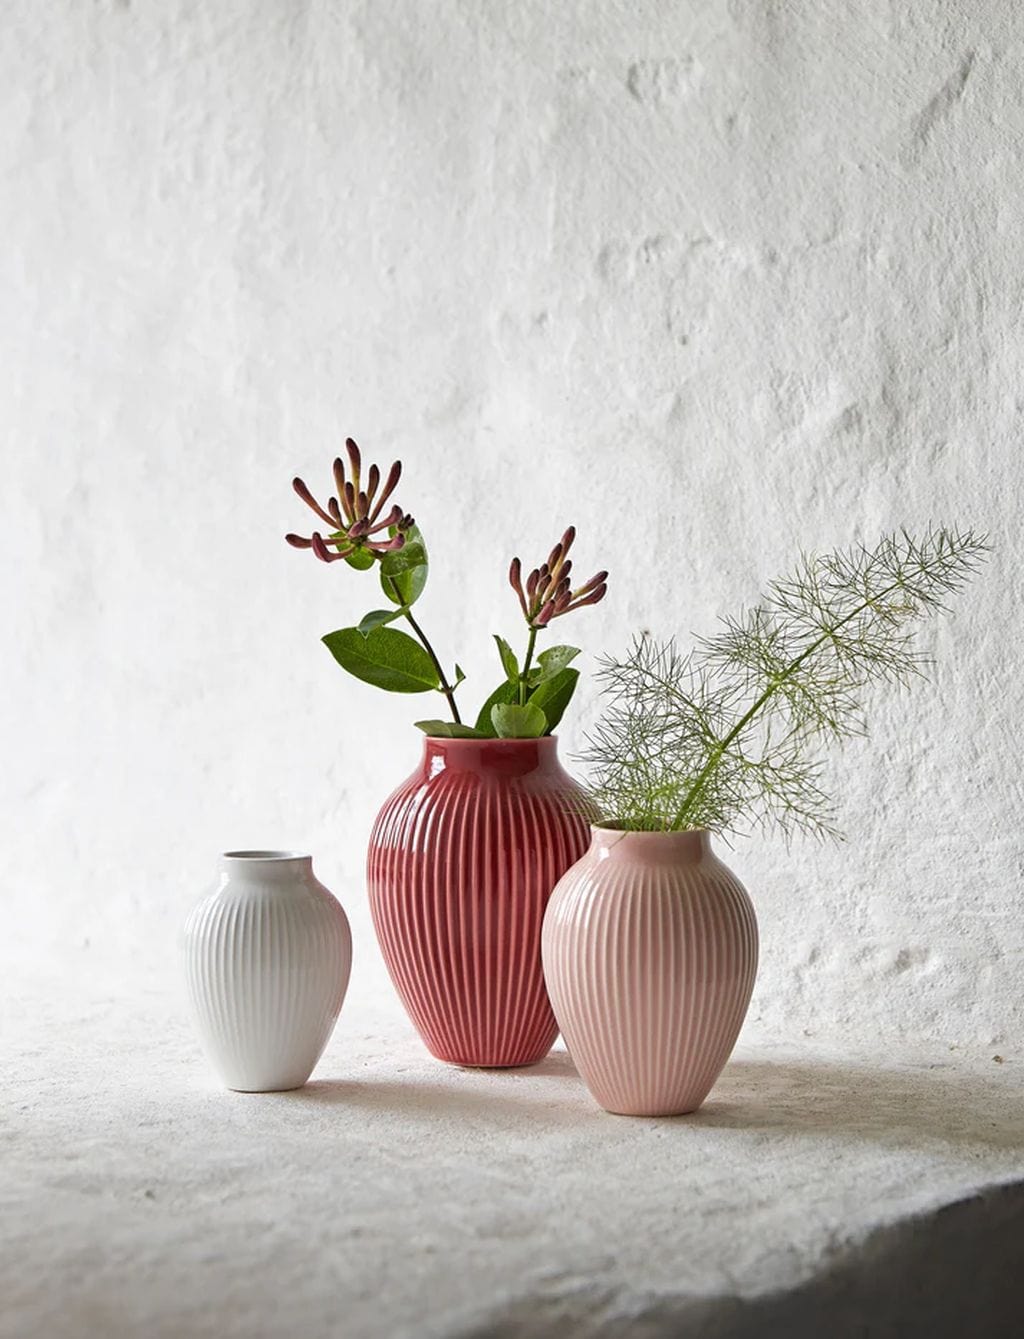 Knabstrup Keramik -Vase mit Grooves H 12,5 cm, Bordeaux